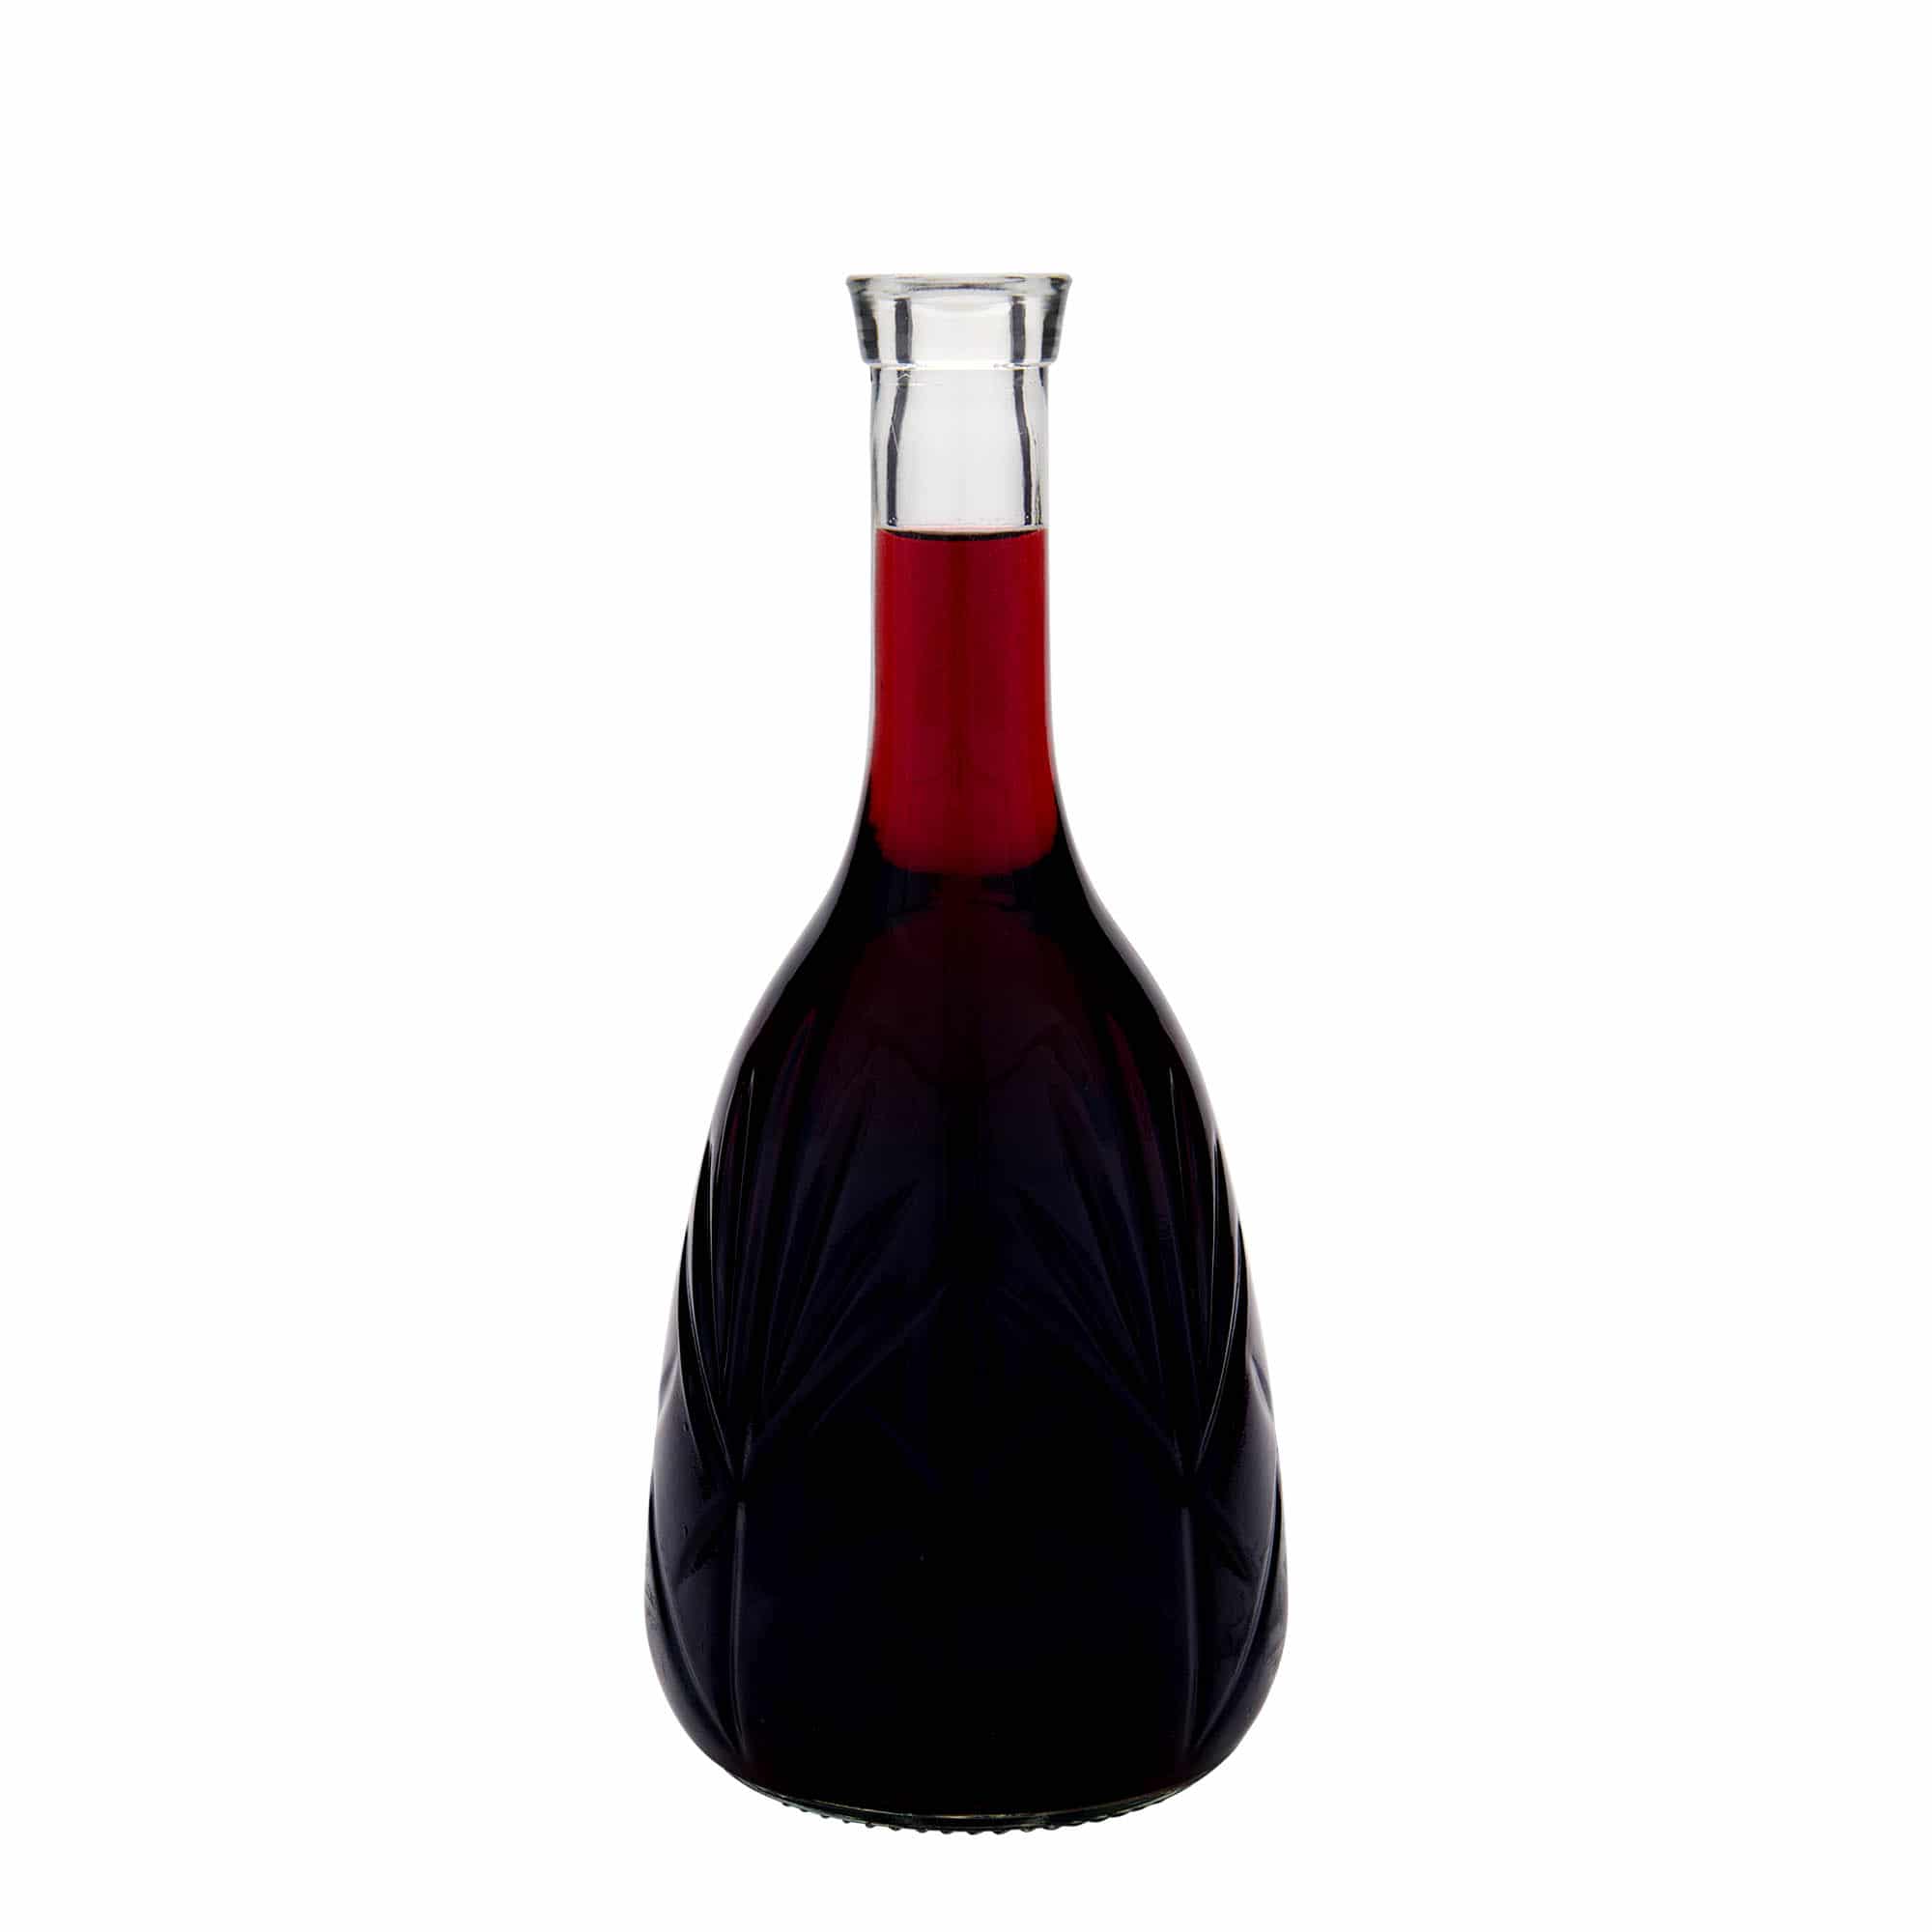 1,000 ml glass bottle 'Reliefa', closure: cork